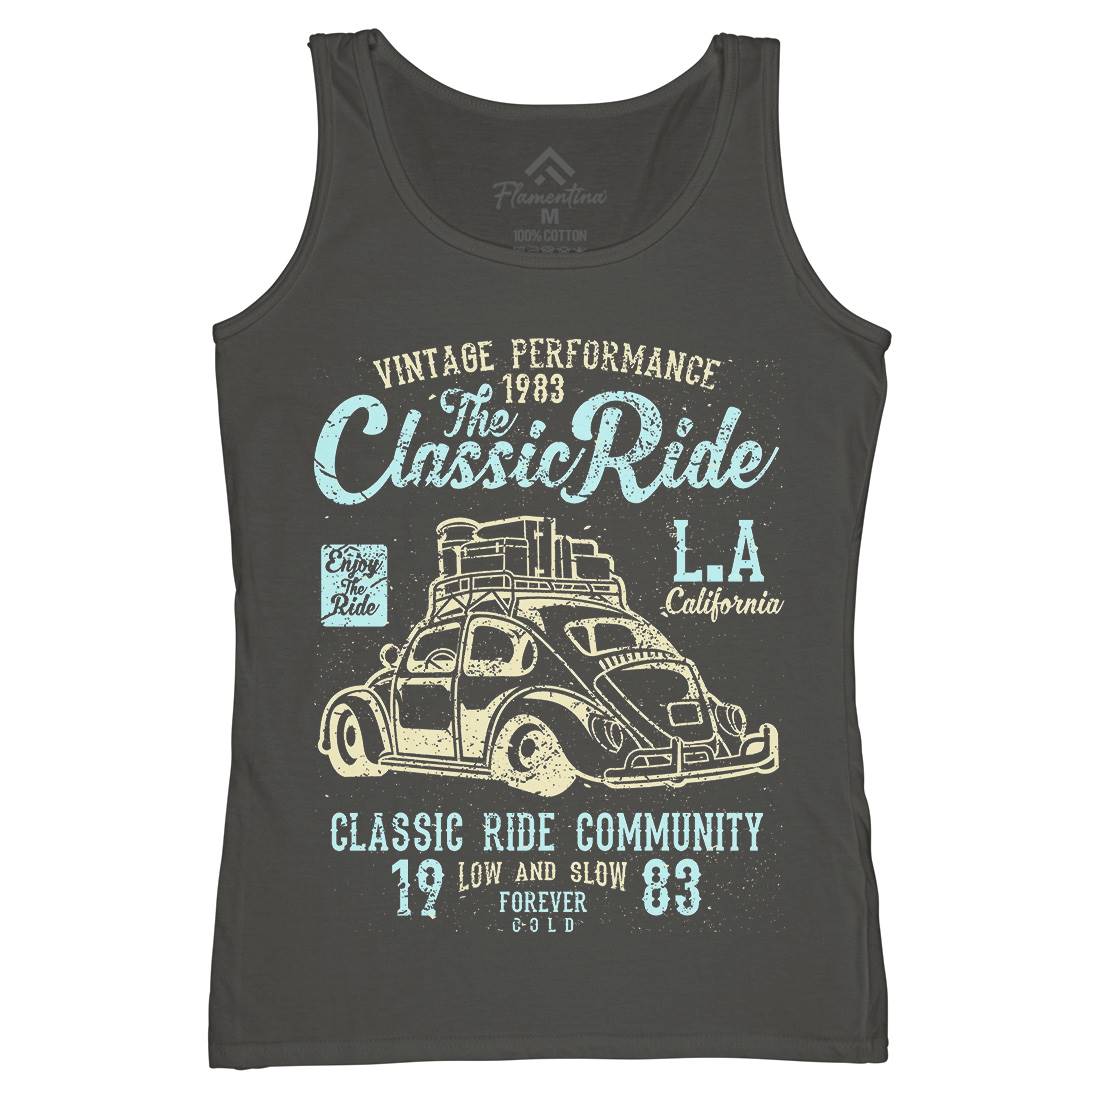 Classic Ride Womens Organic Tank Top Vest Cars A171